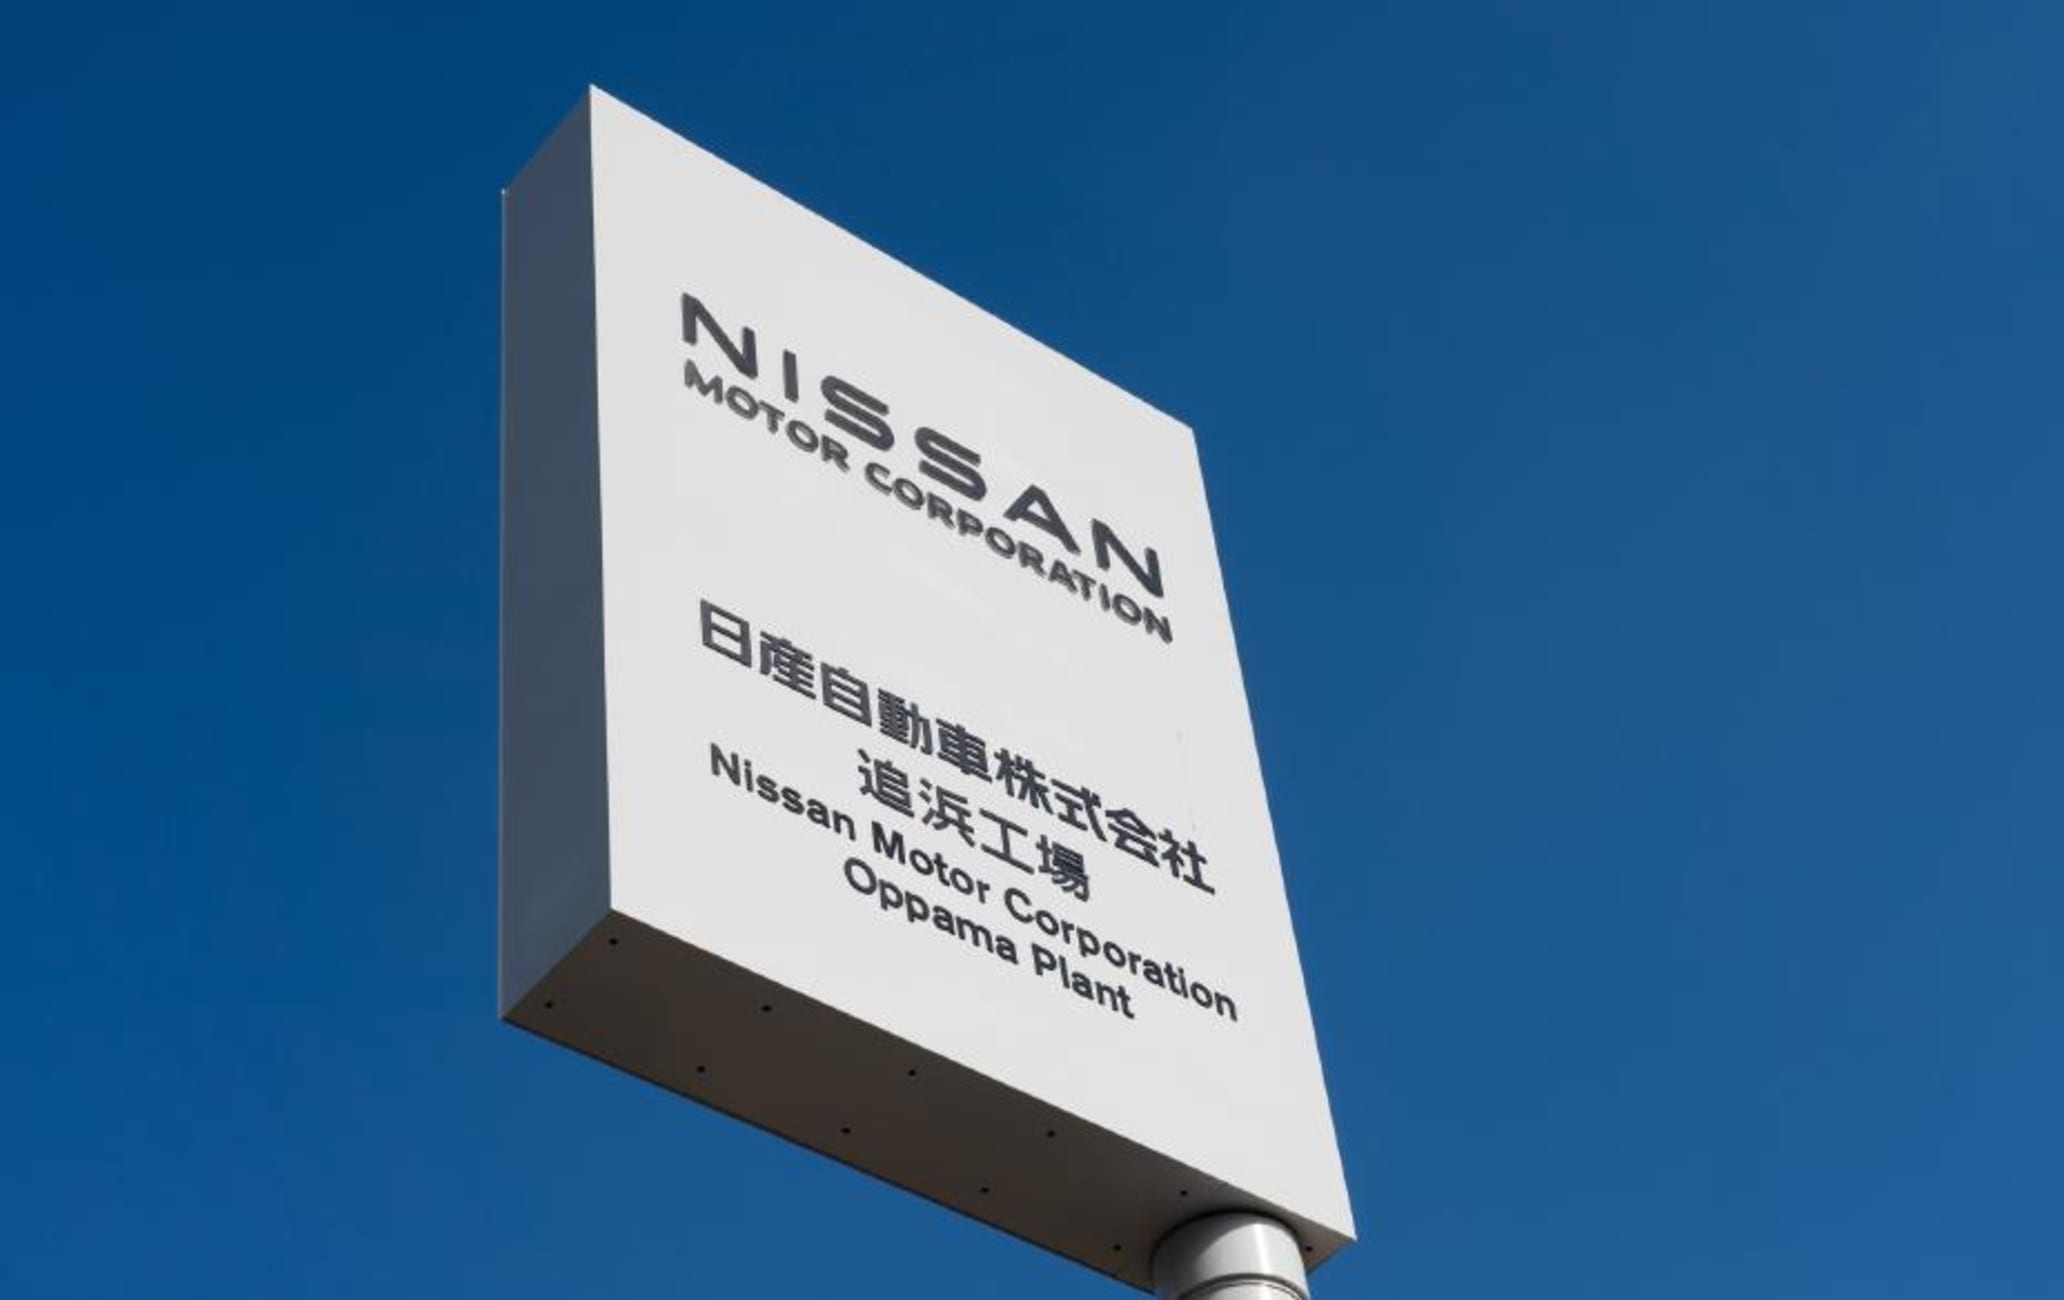 Nissan Oppama Plant Tour